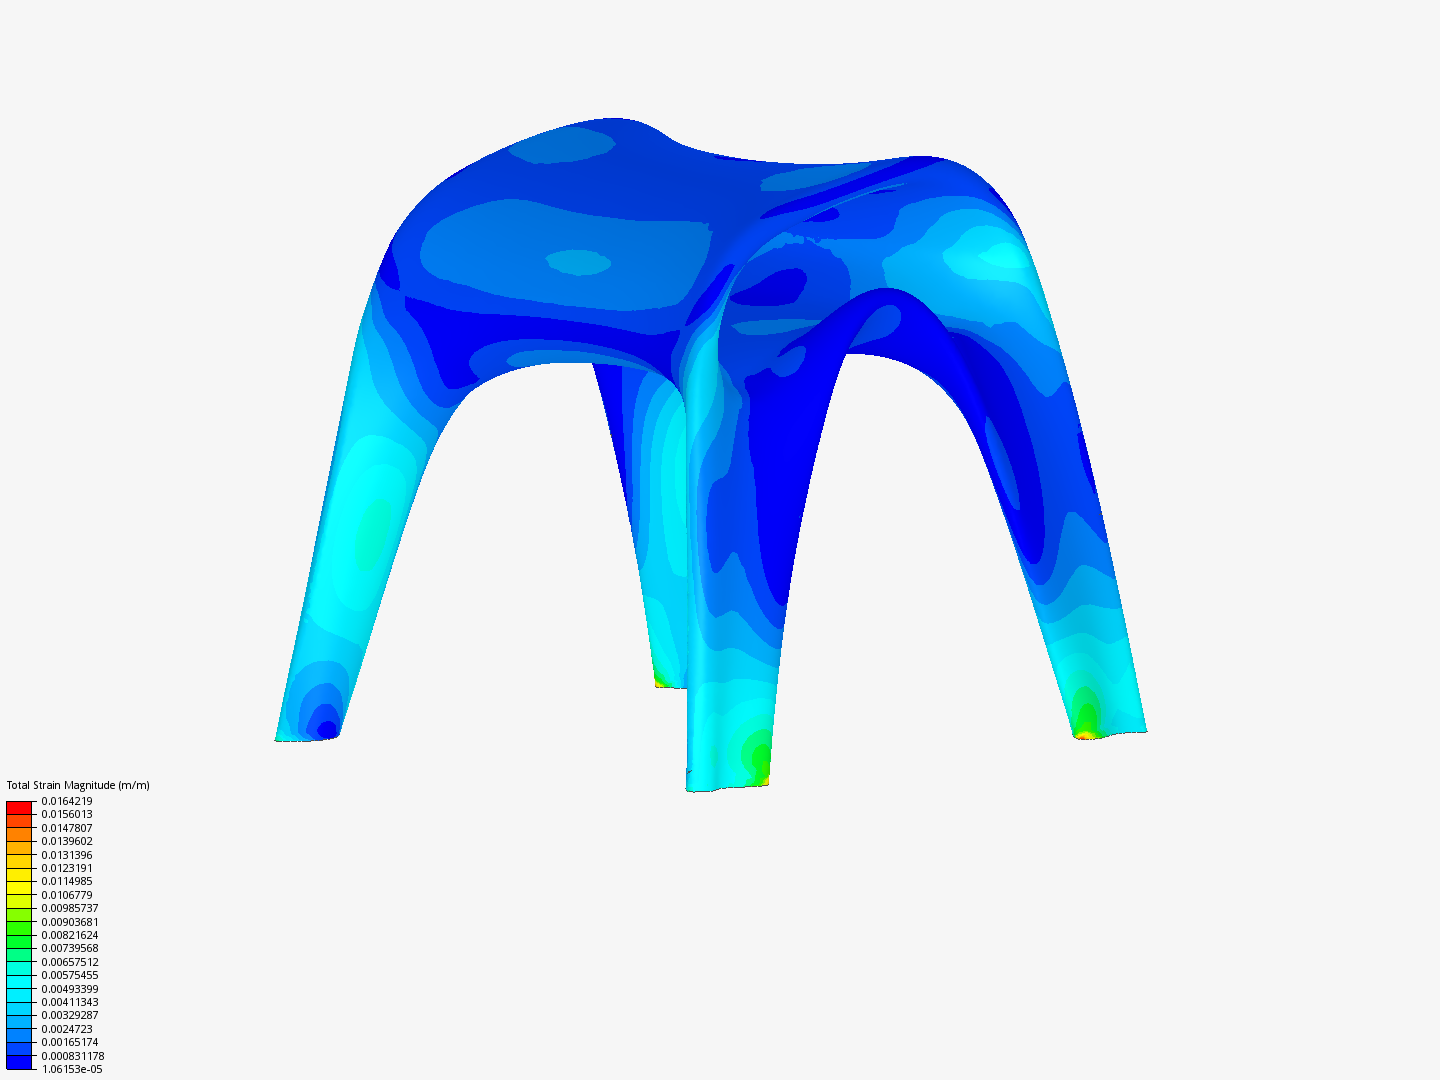 3D print stool image